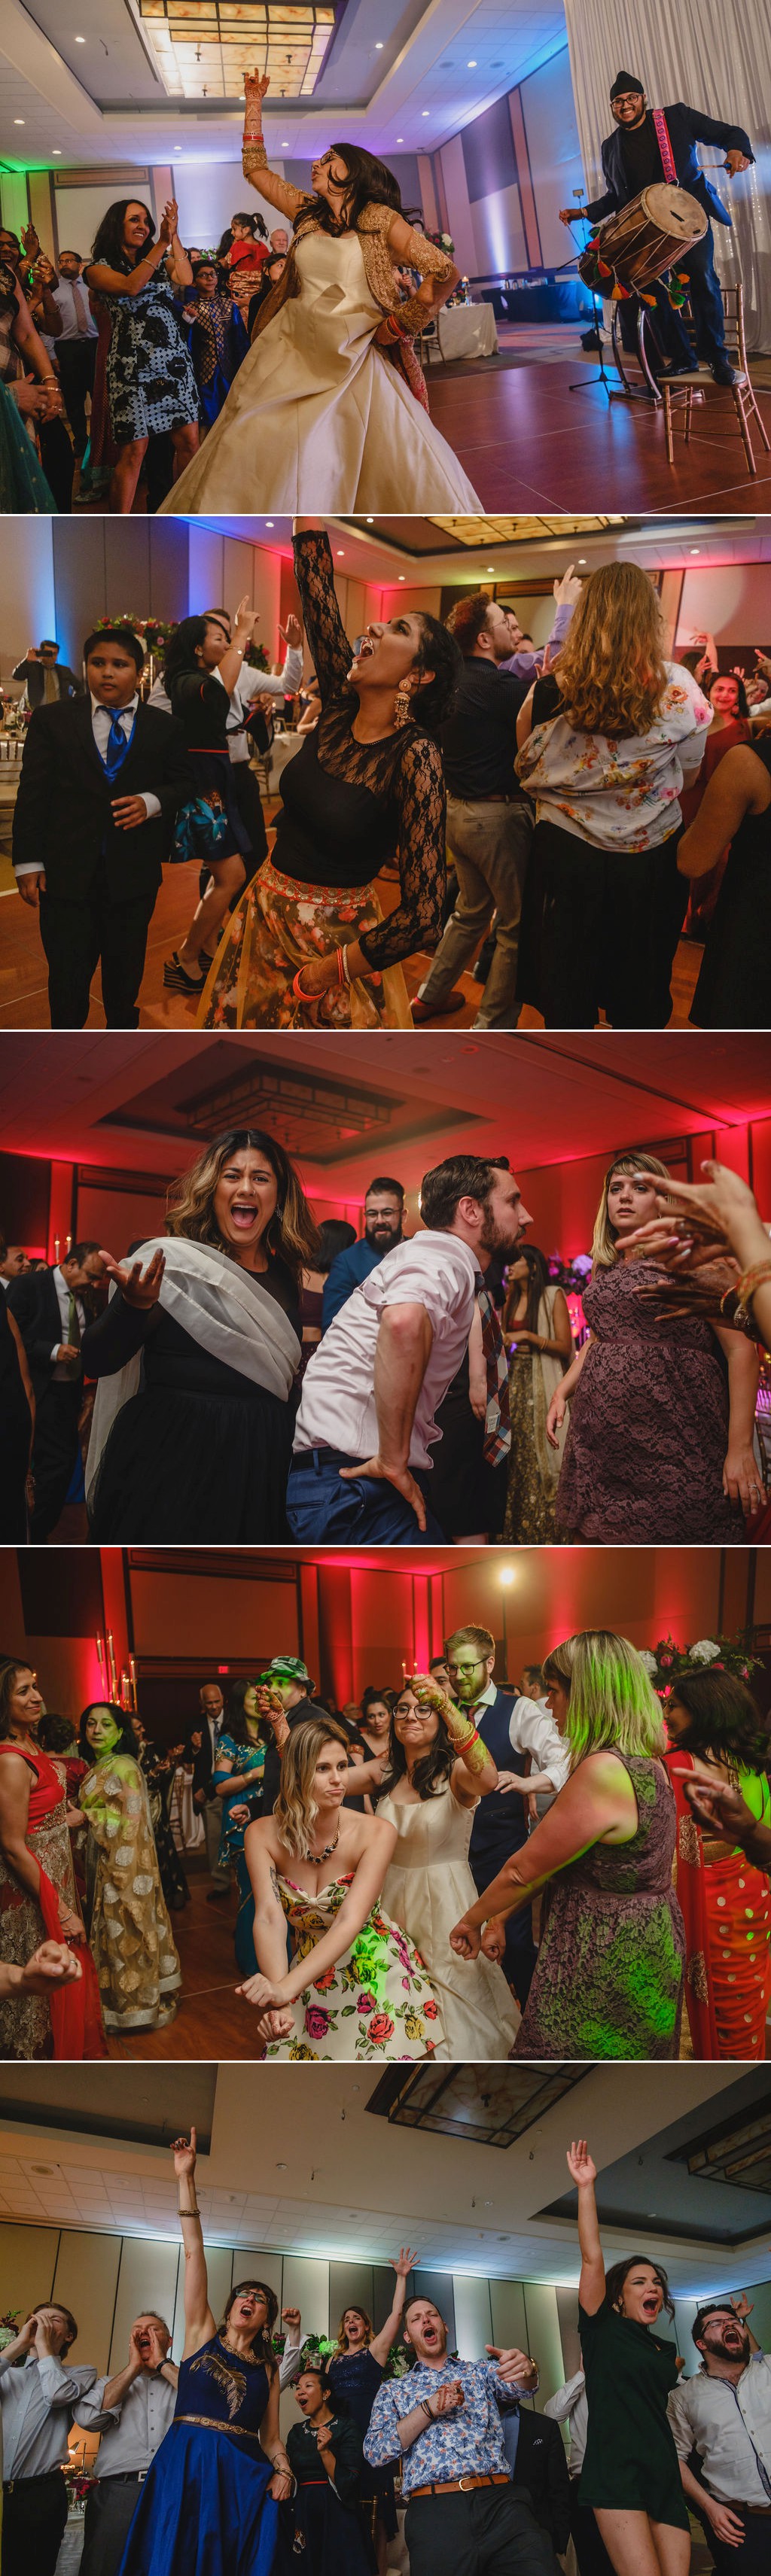 photos of dancing at a wedding reception